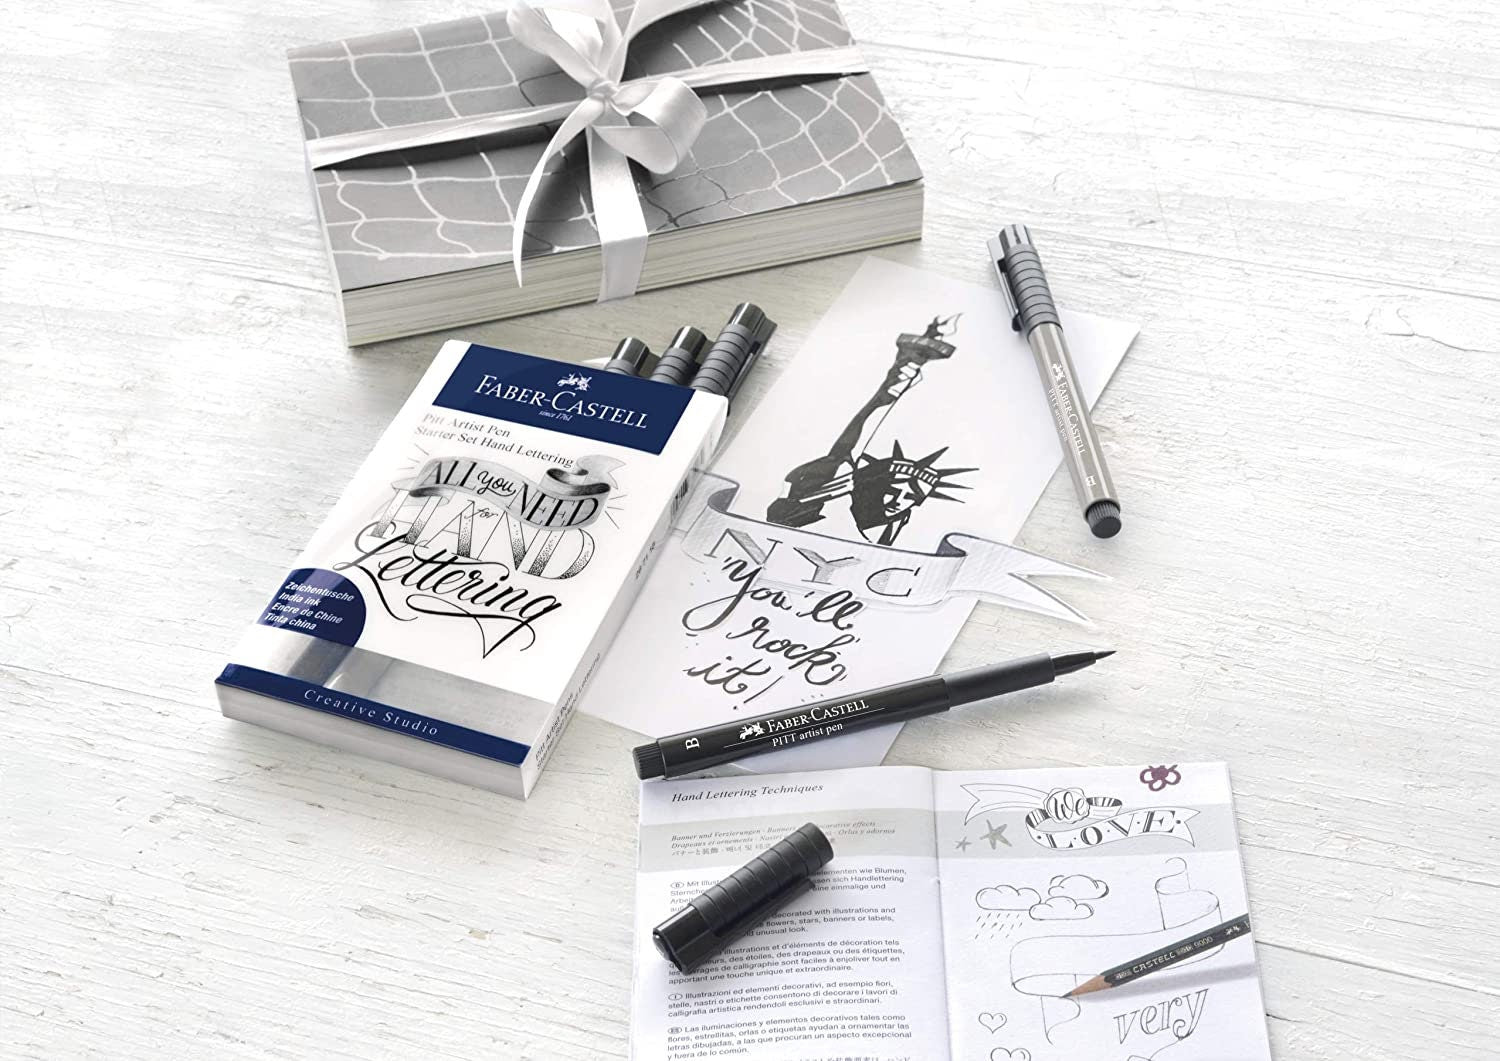 Faber-Castell Pencil Pen Pitt Artist Pen Lettering Starter Set FC26711 –  ATALONDON